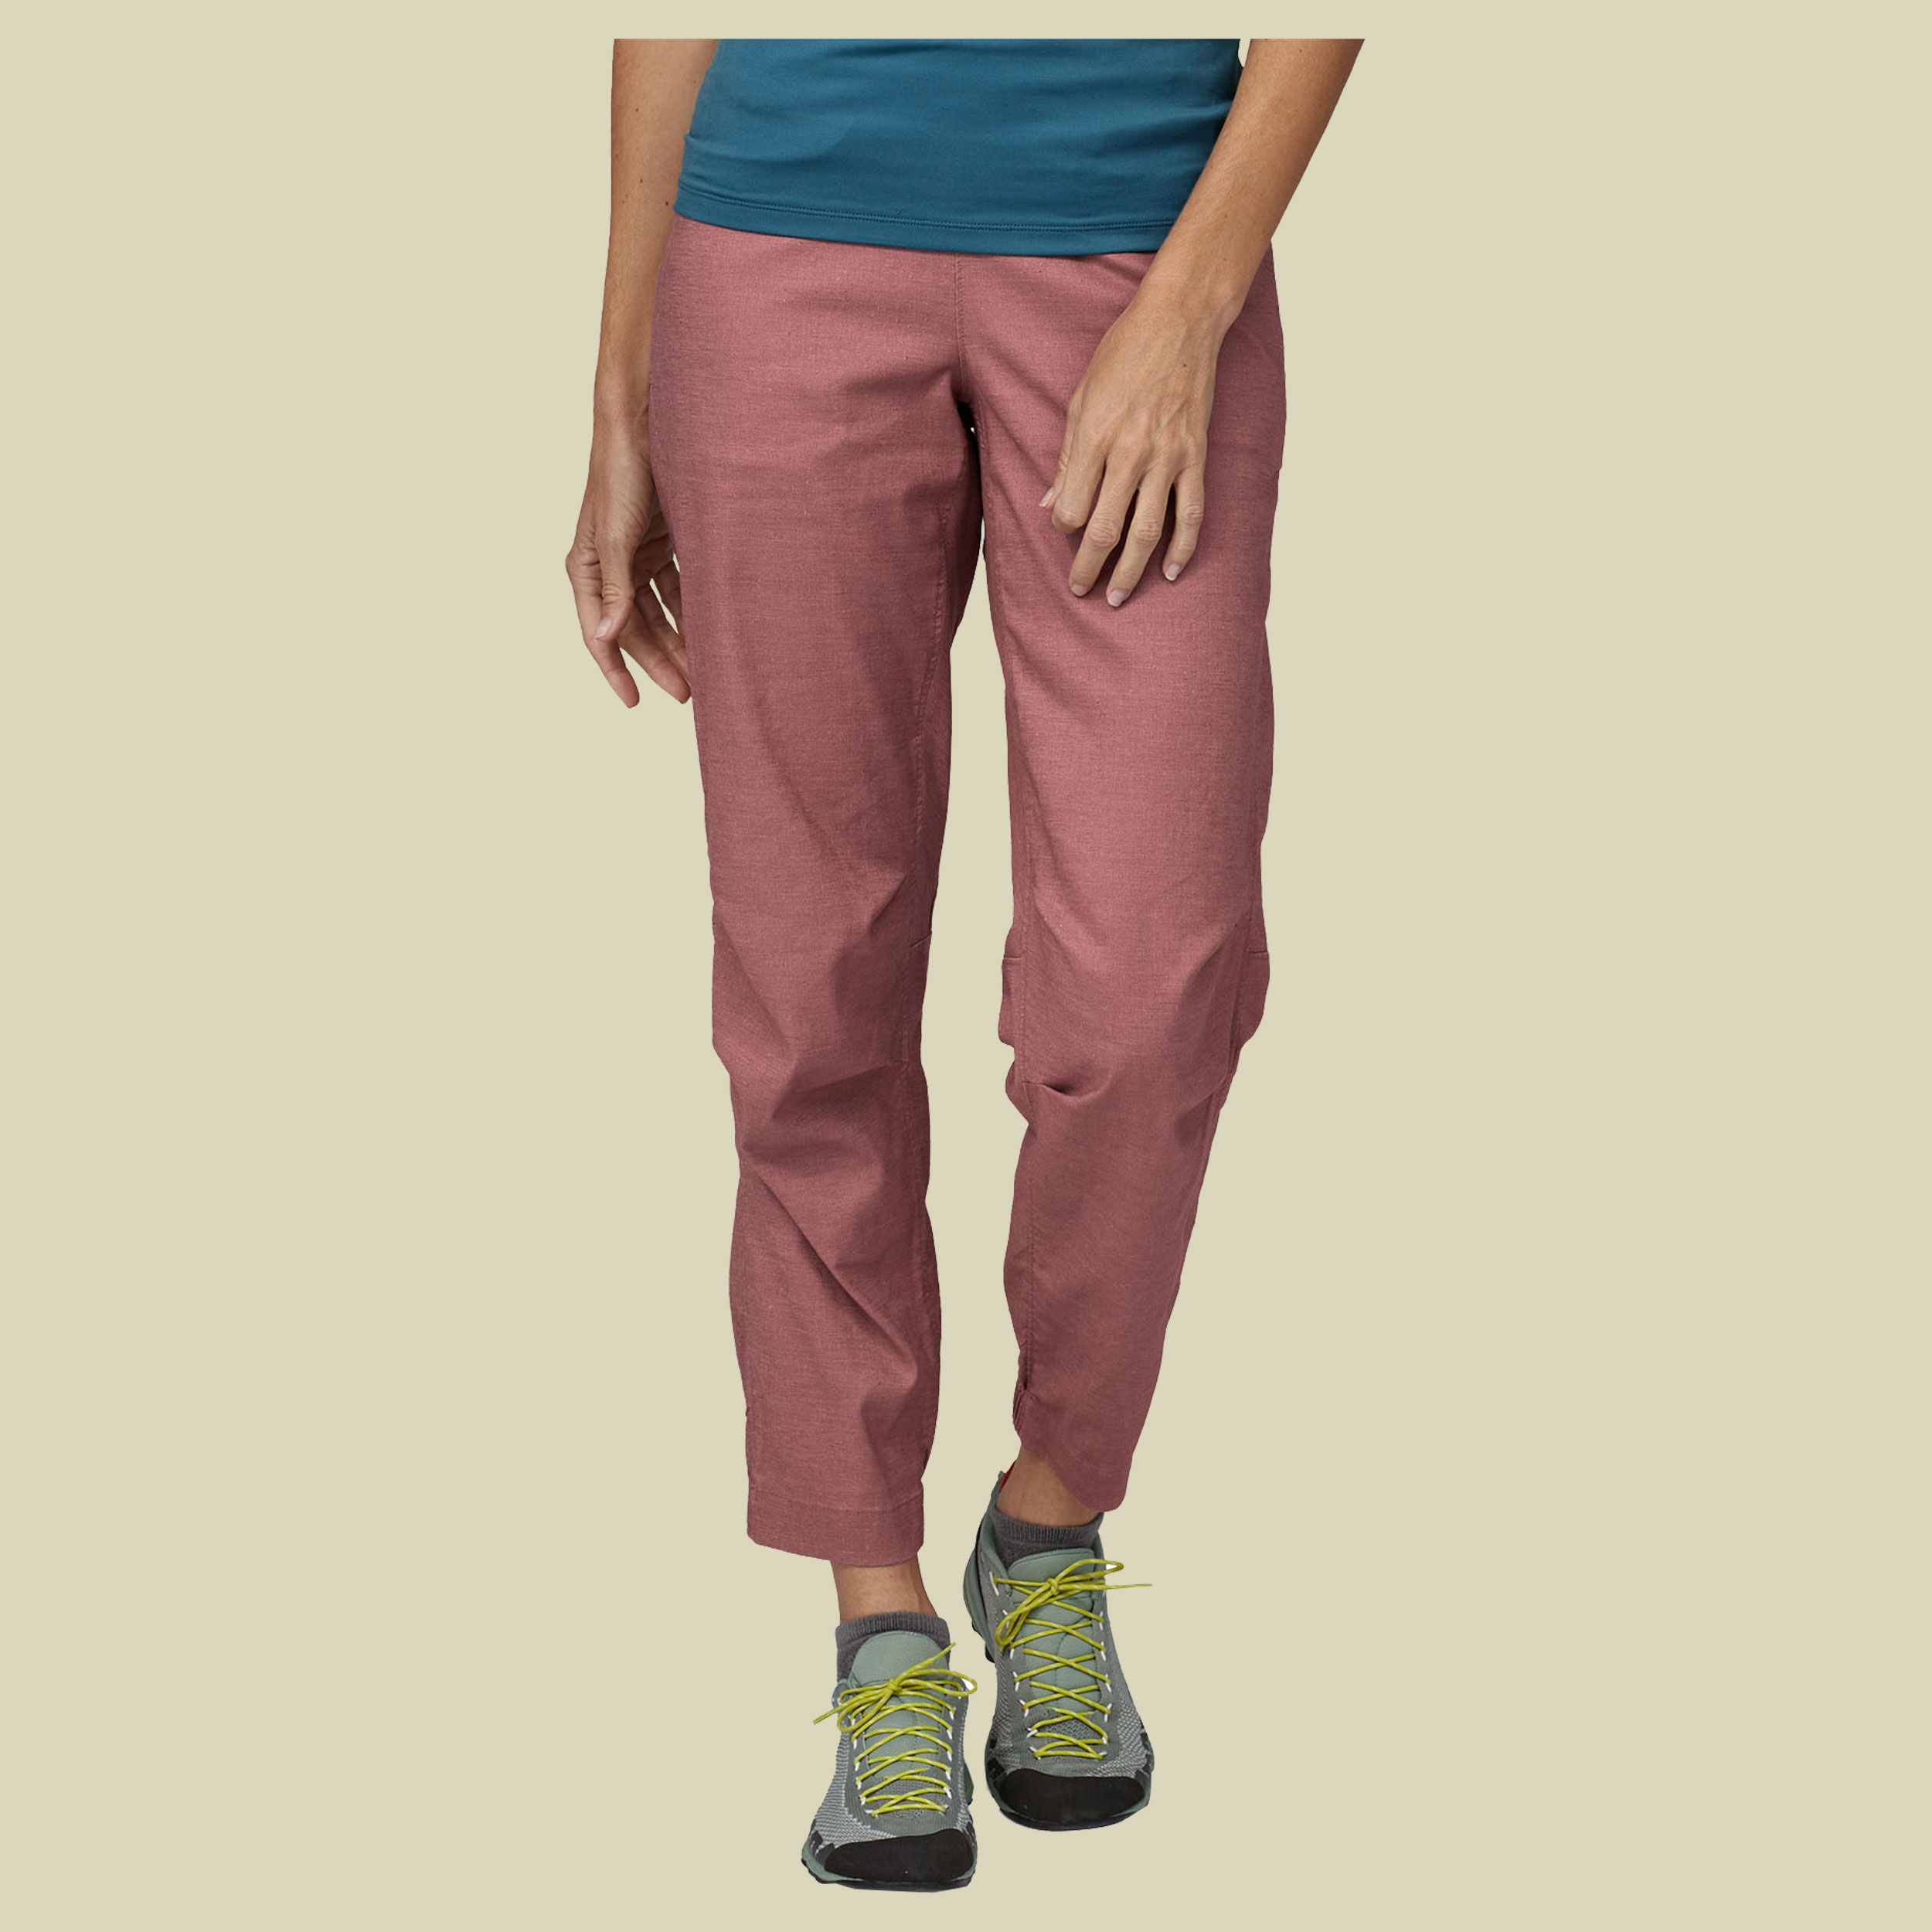 Hampi Rock Pants Women Größe L (10) Farbe evening mauve